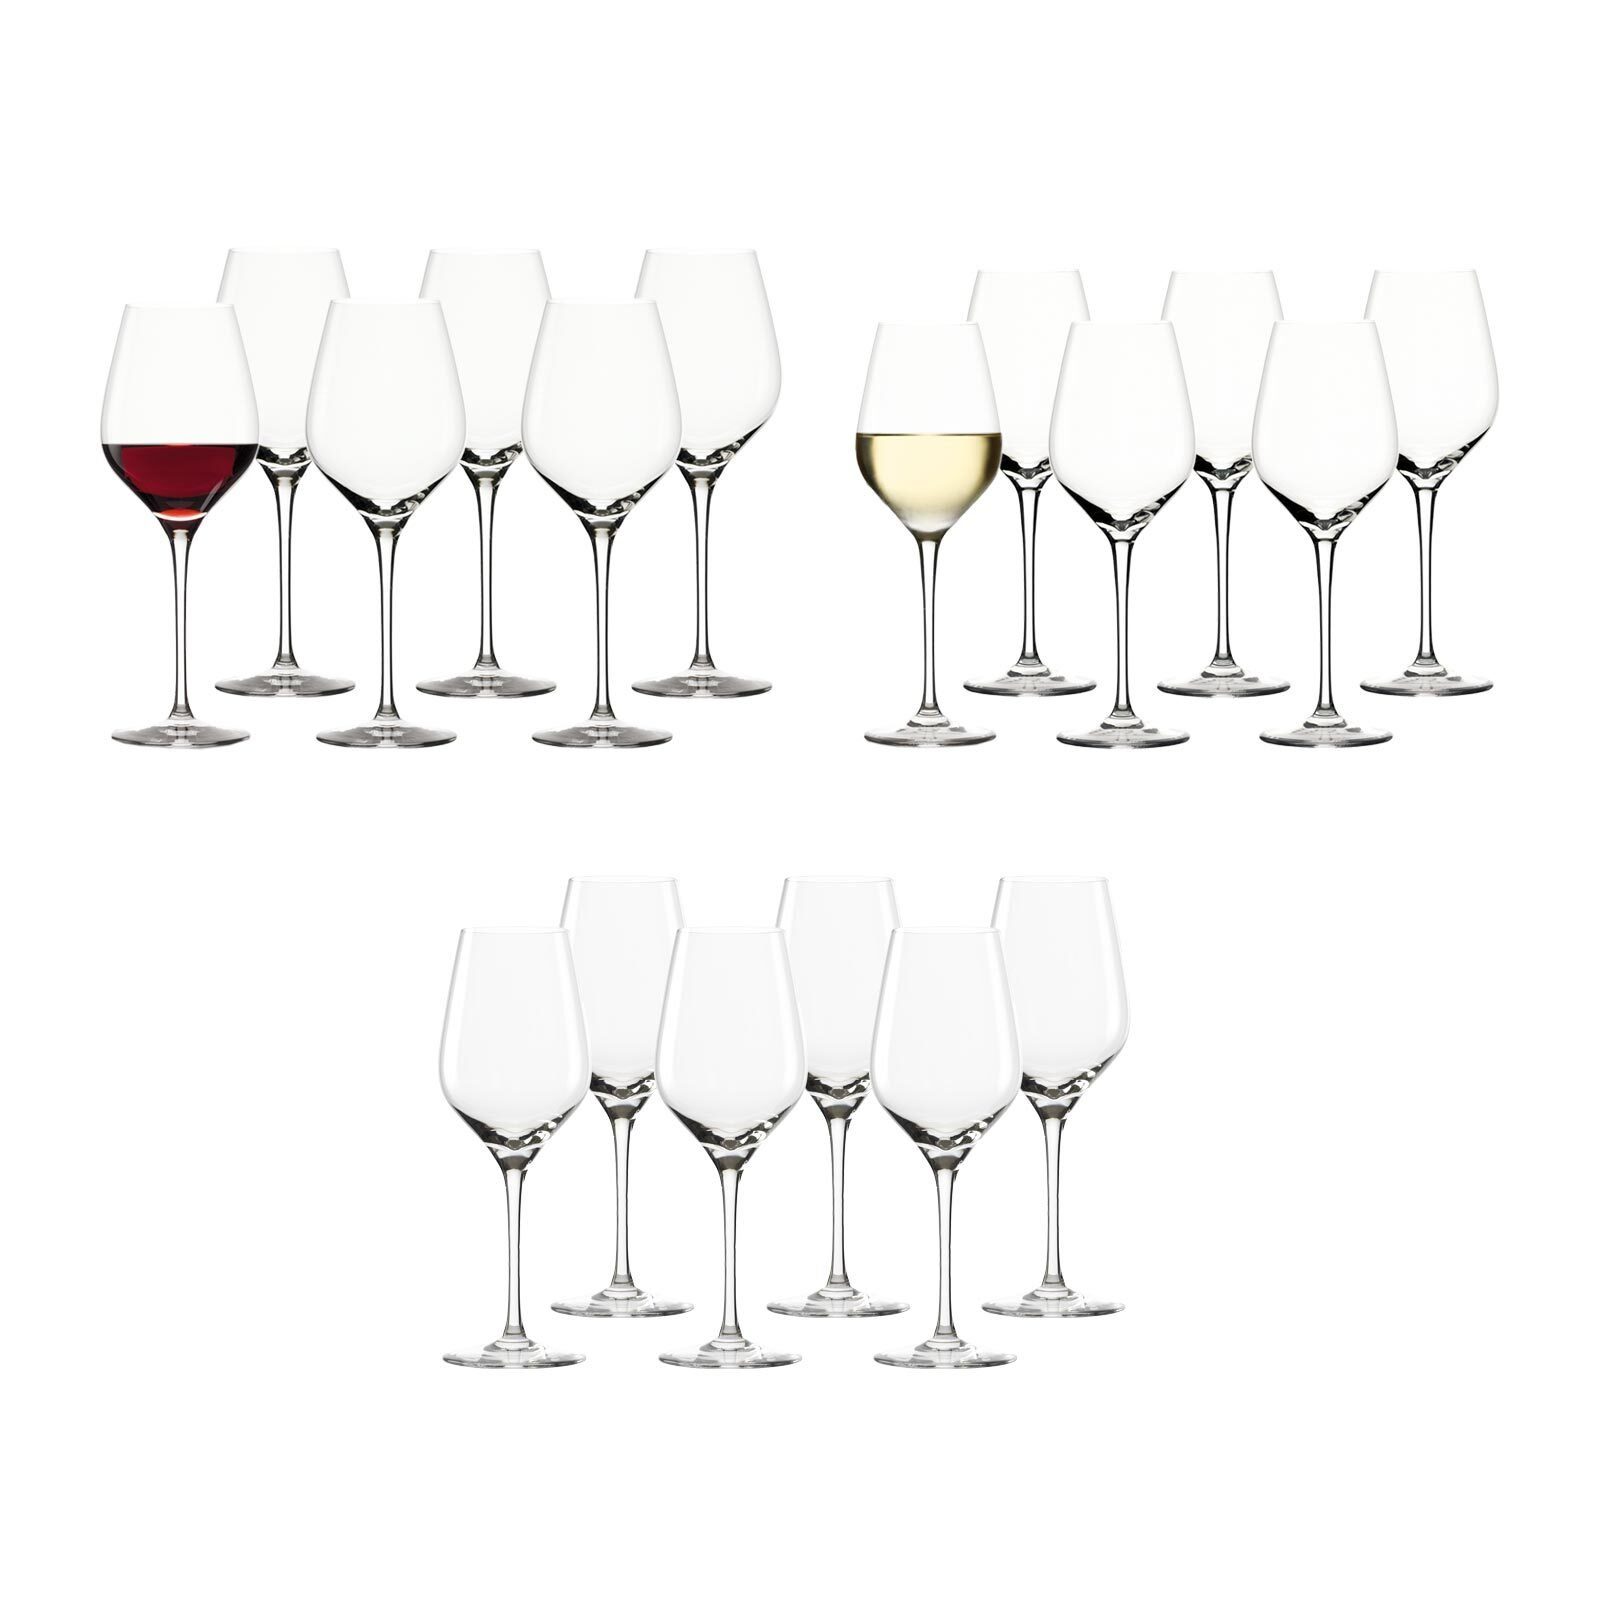 Royal Exquisit Tastinggläser Wein Glas Stölzle Glas Set, 18er